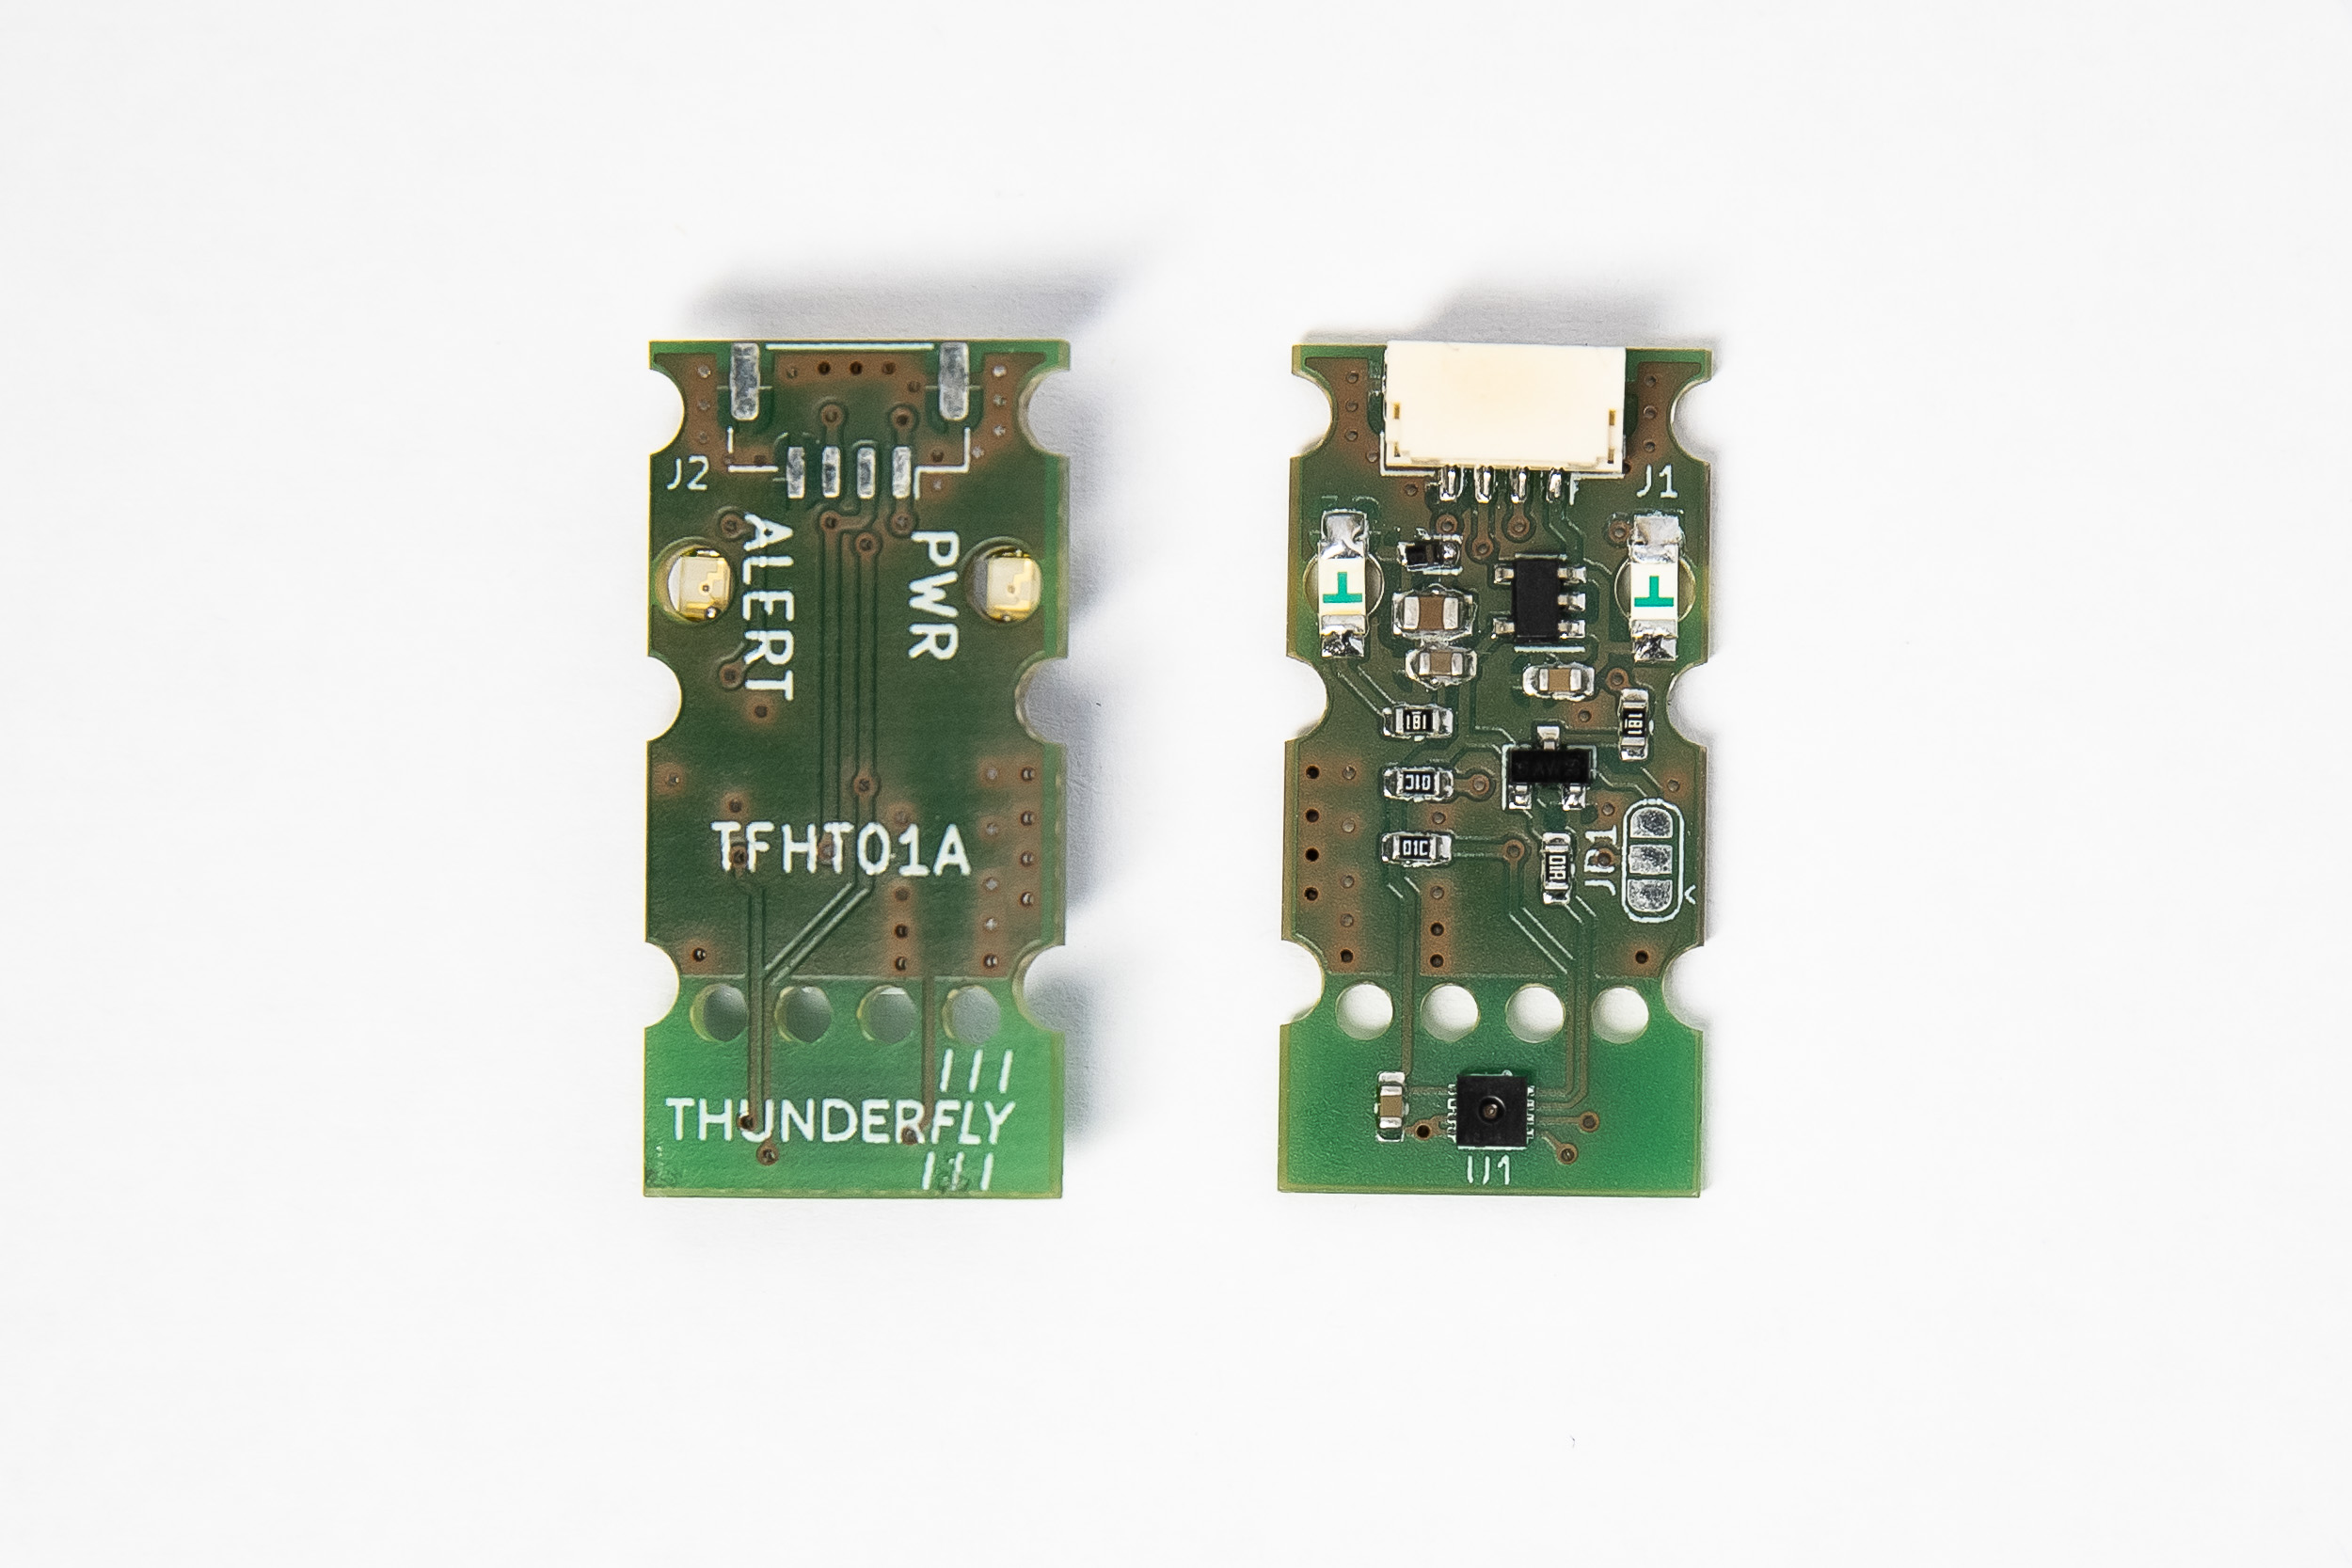 TFHT01 view on internal electronics